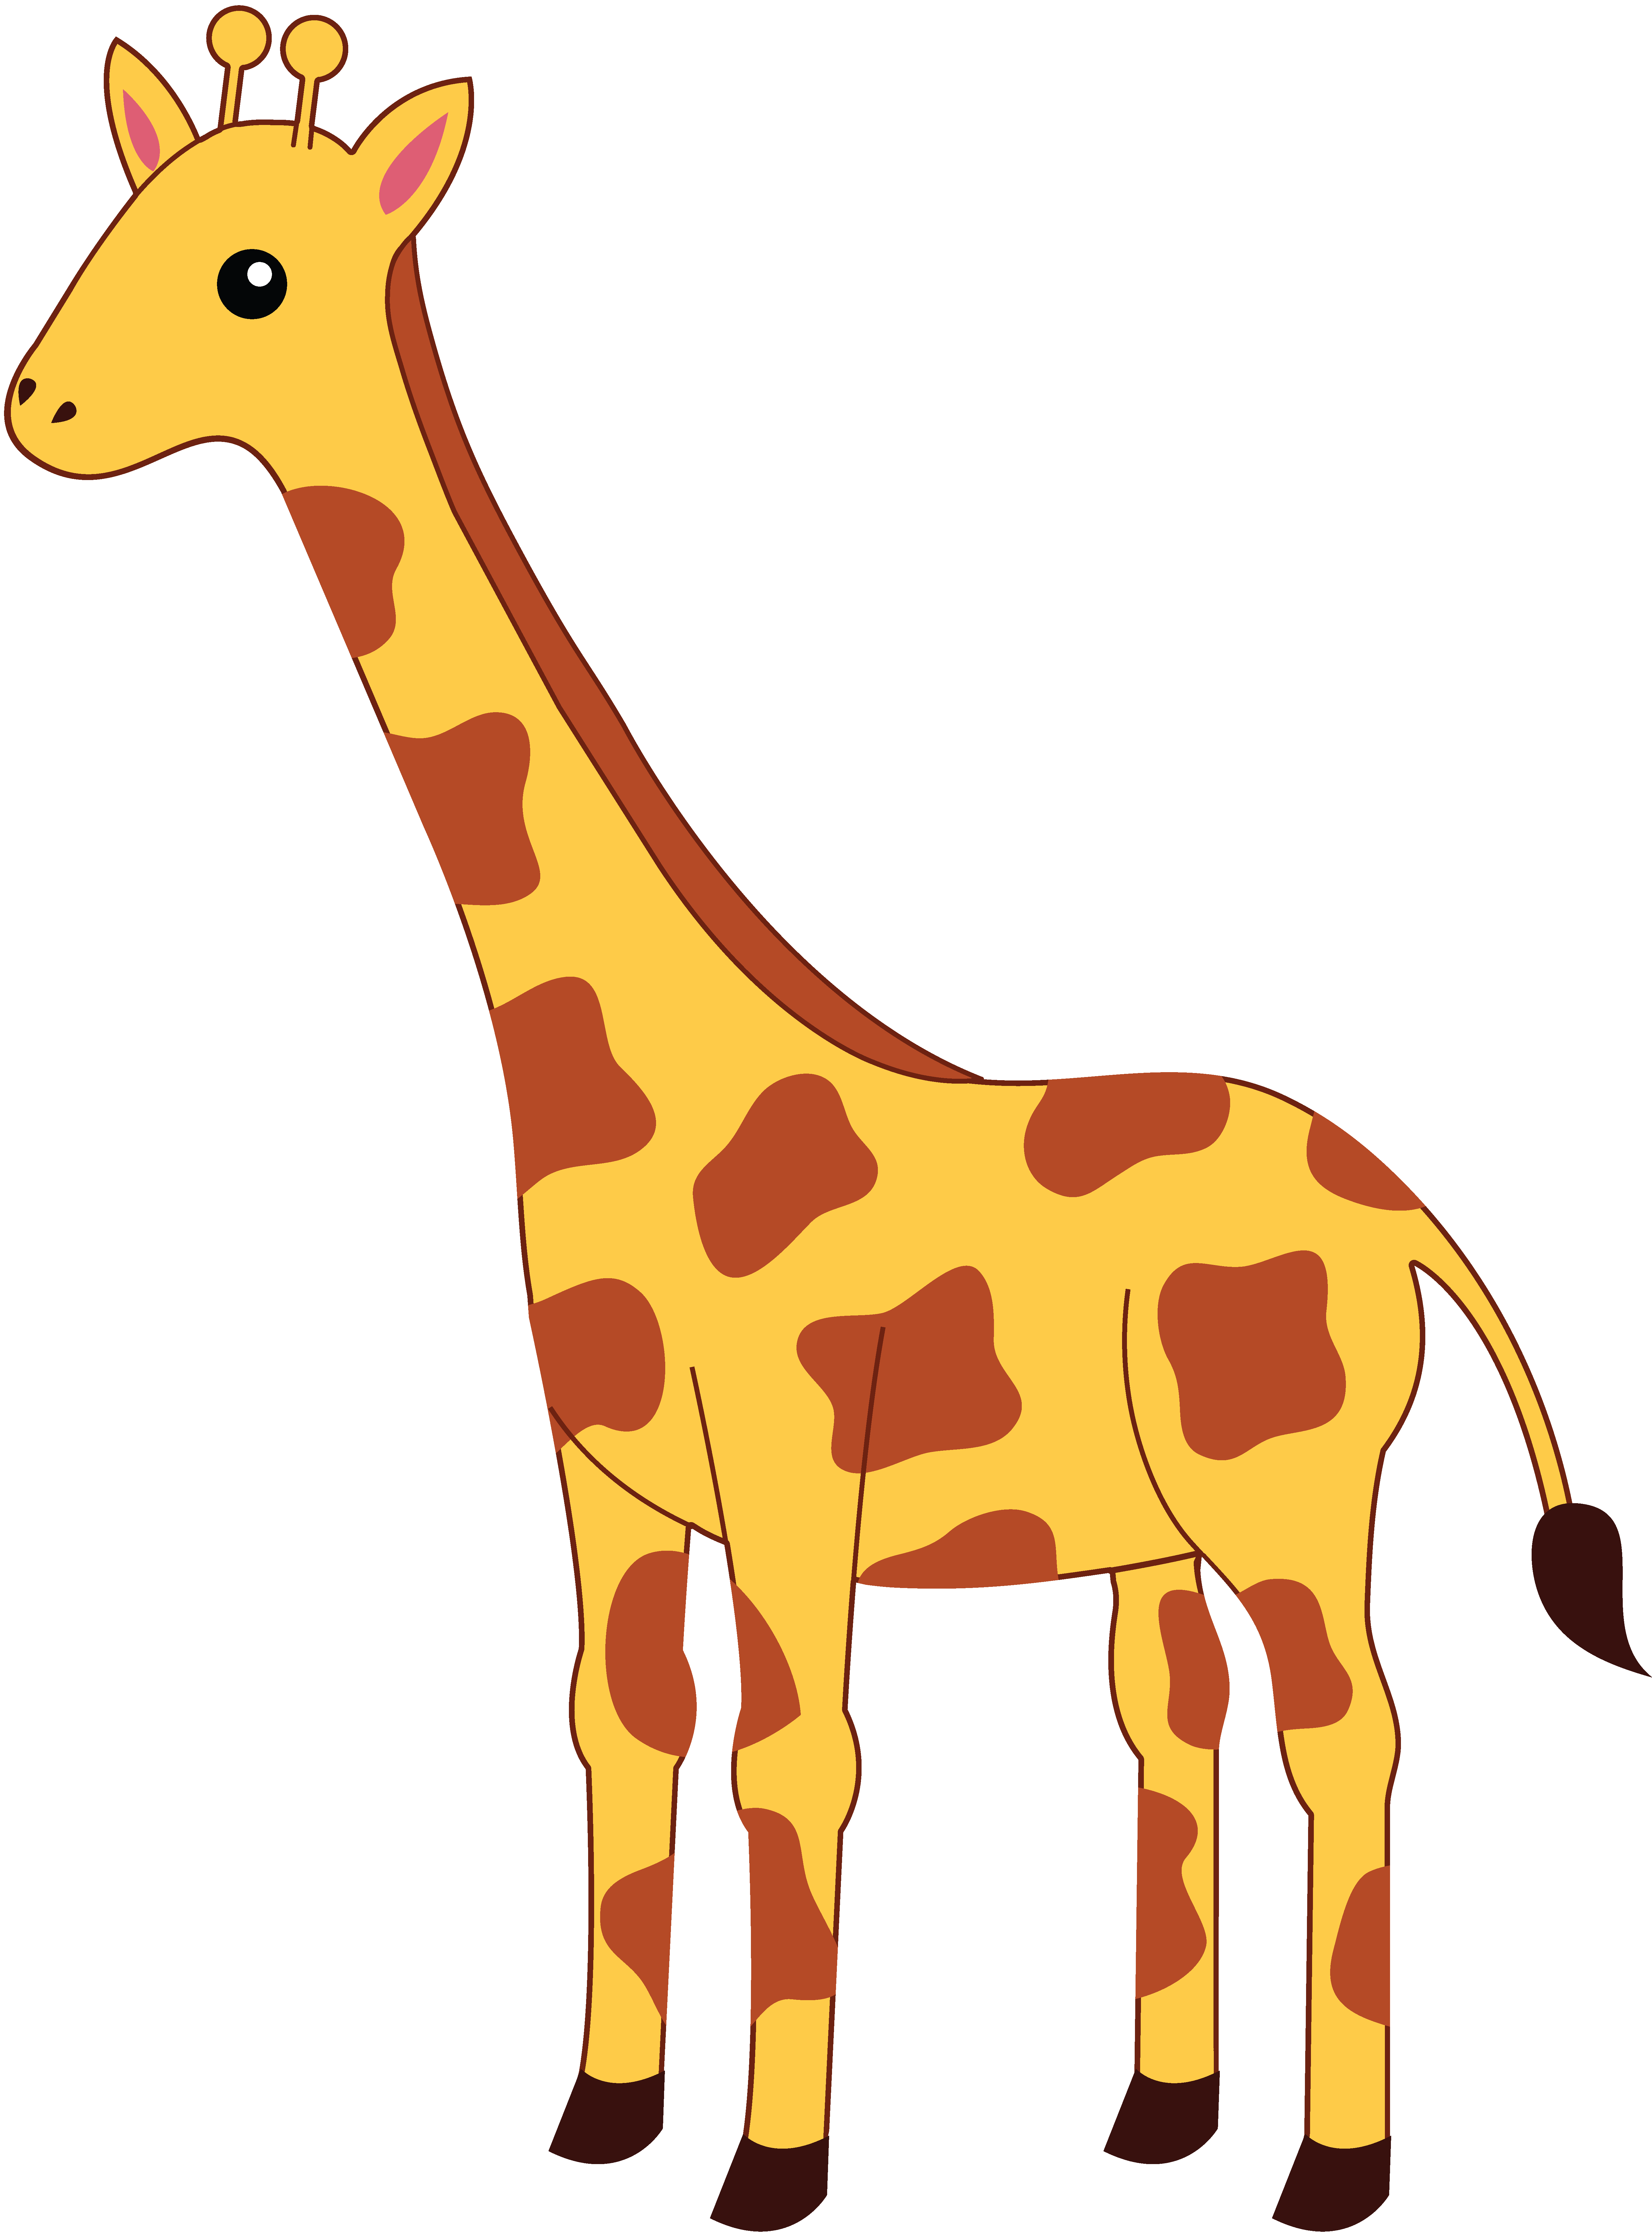 Woodland clipart mountain animal. Simple giraffe outline cute